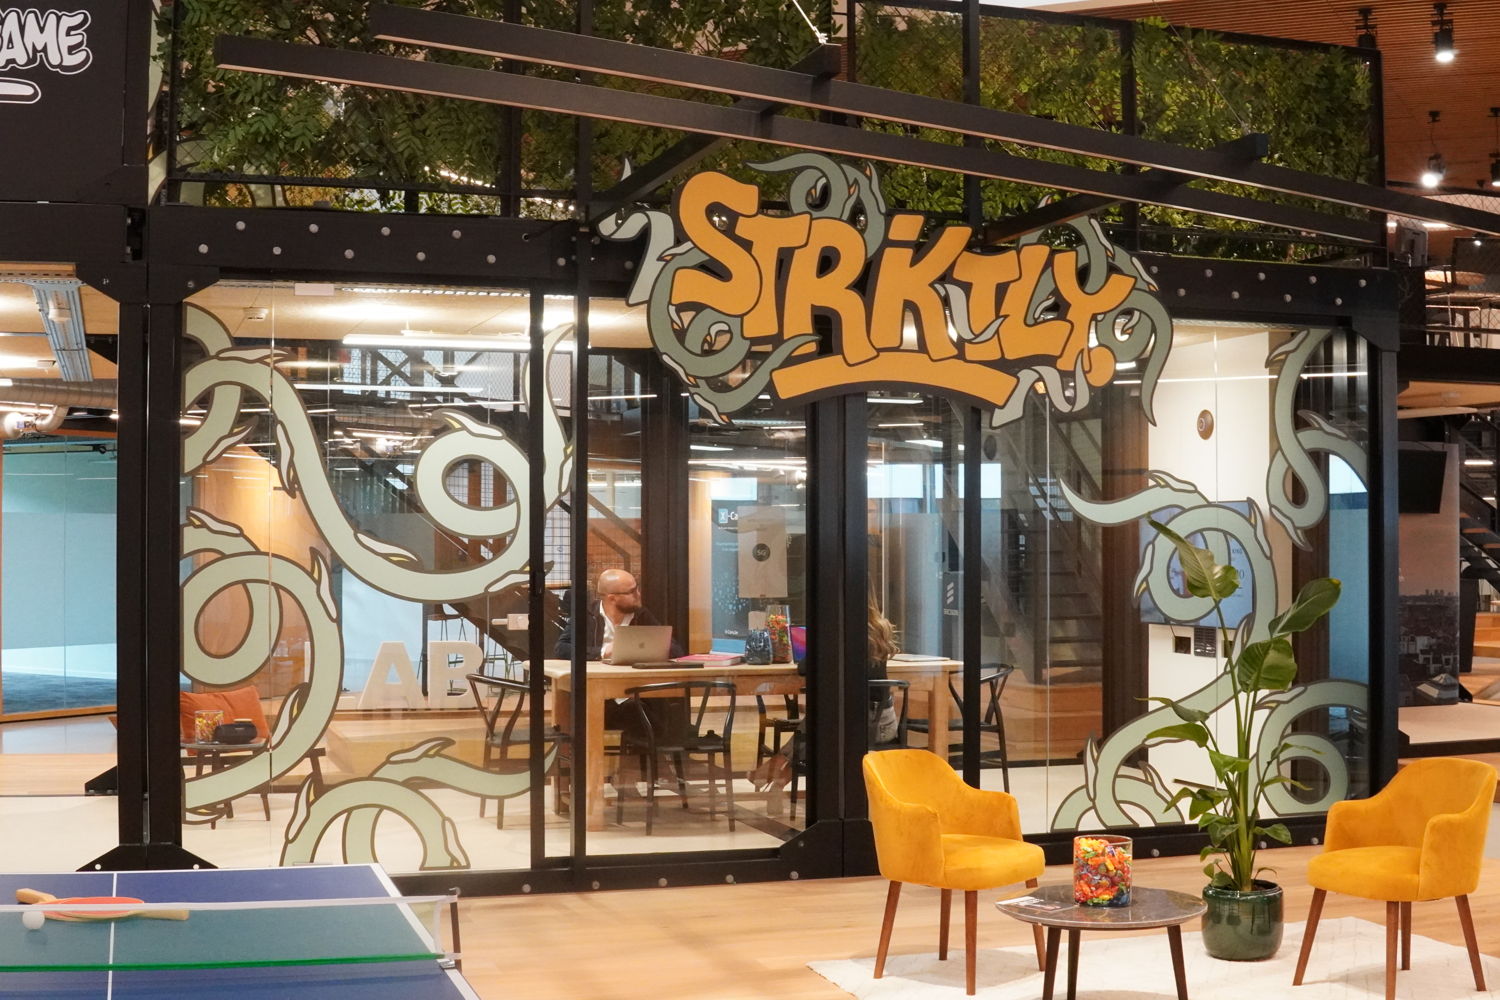 Striktly Business Software - Corda Campus Hasselt